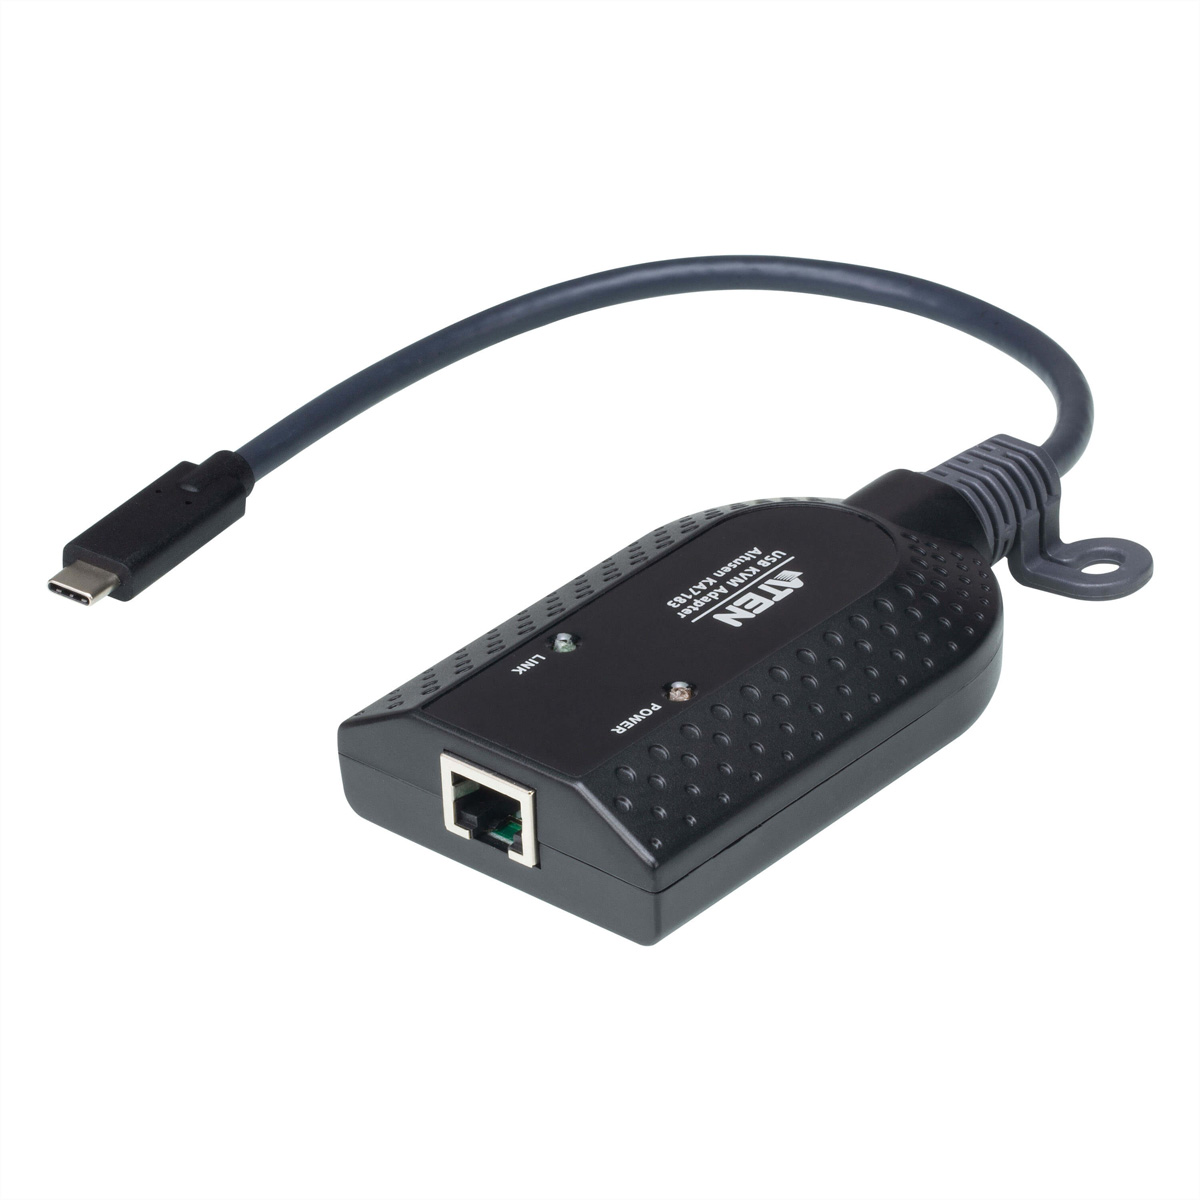 ATEN KVM m 0,1 Media VGA-auf-KVM-Adapterkabel, Virtual USB-C Adapter, KA7183